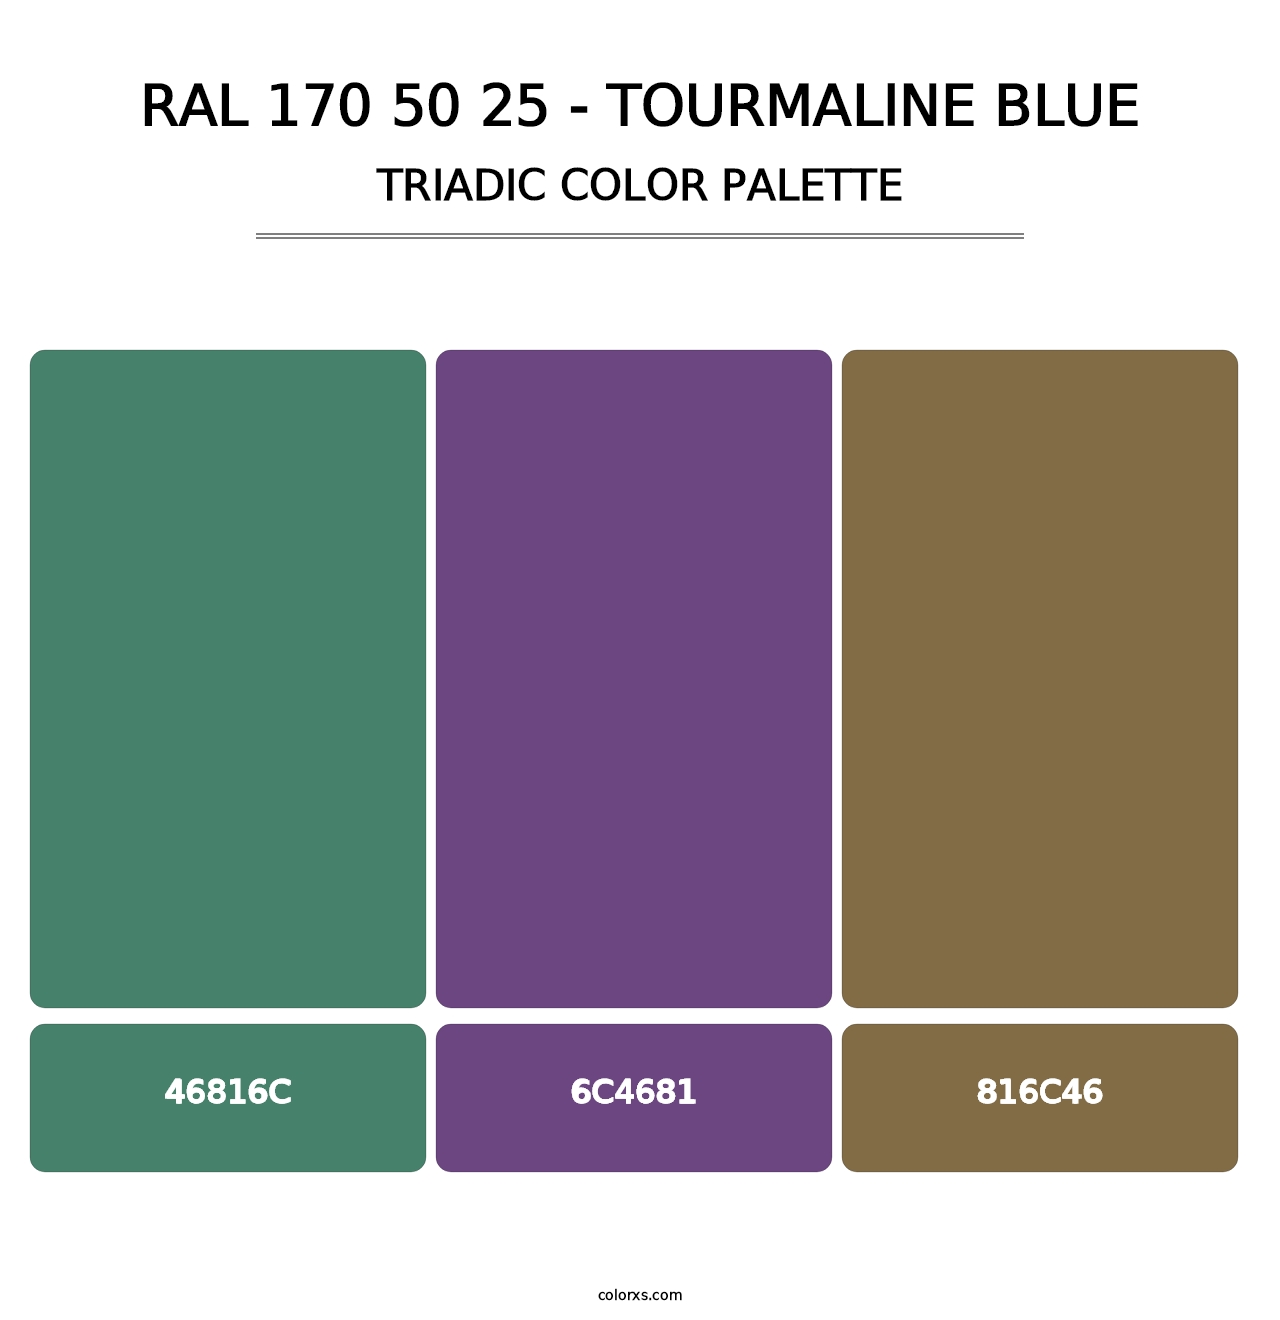 RAL 170 50 25 - Tourmaline Blue - Triadic Color Palette